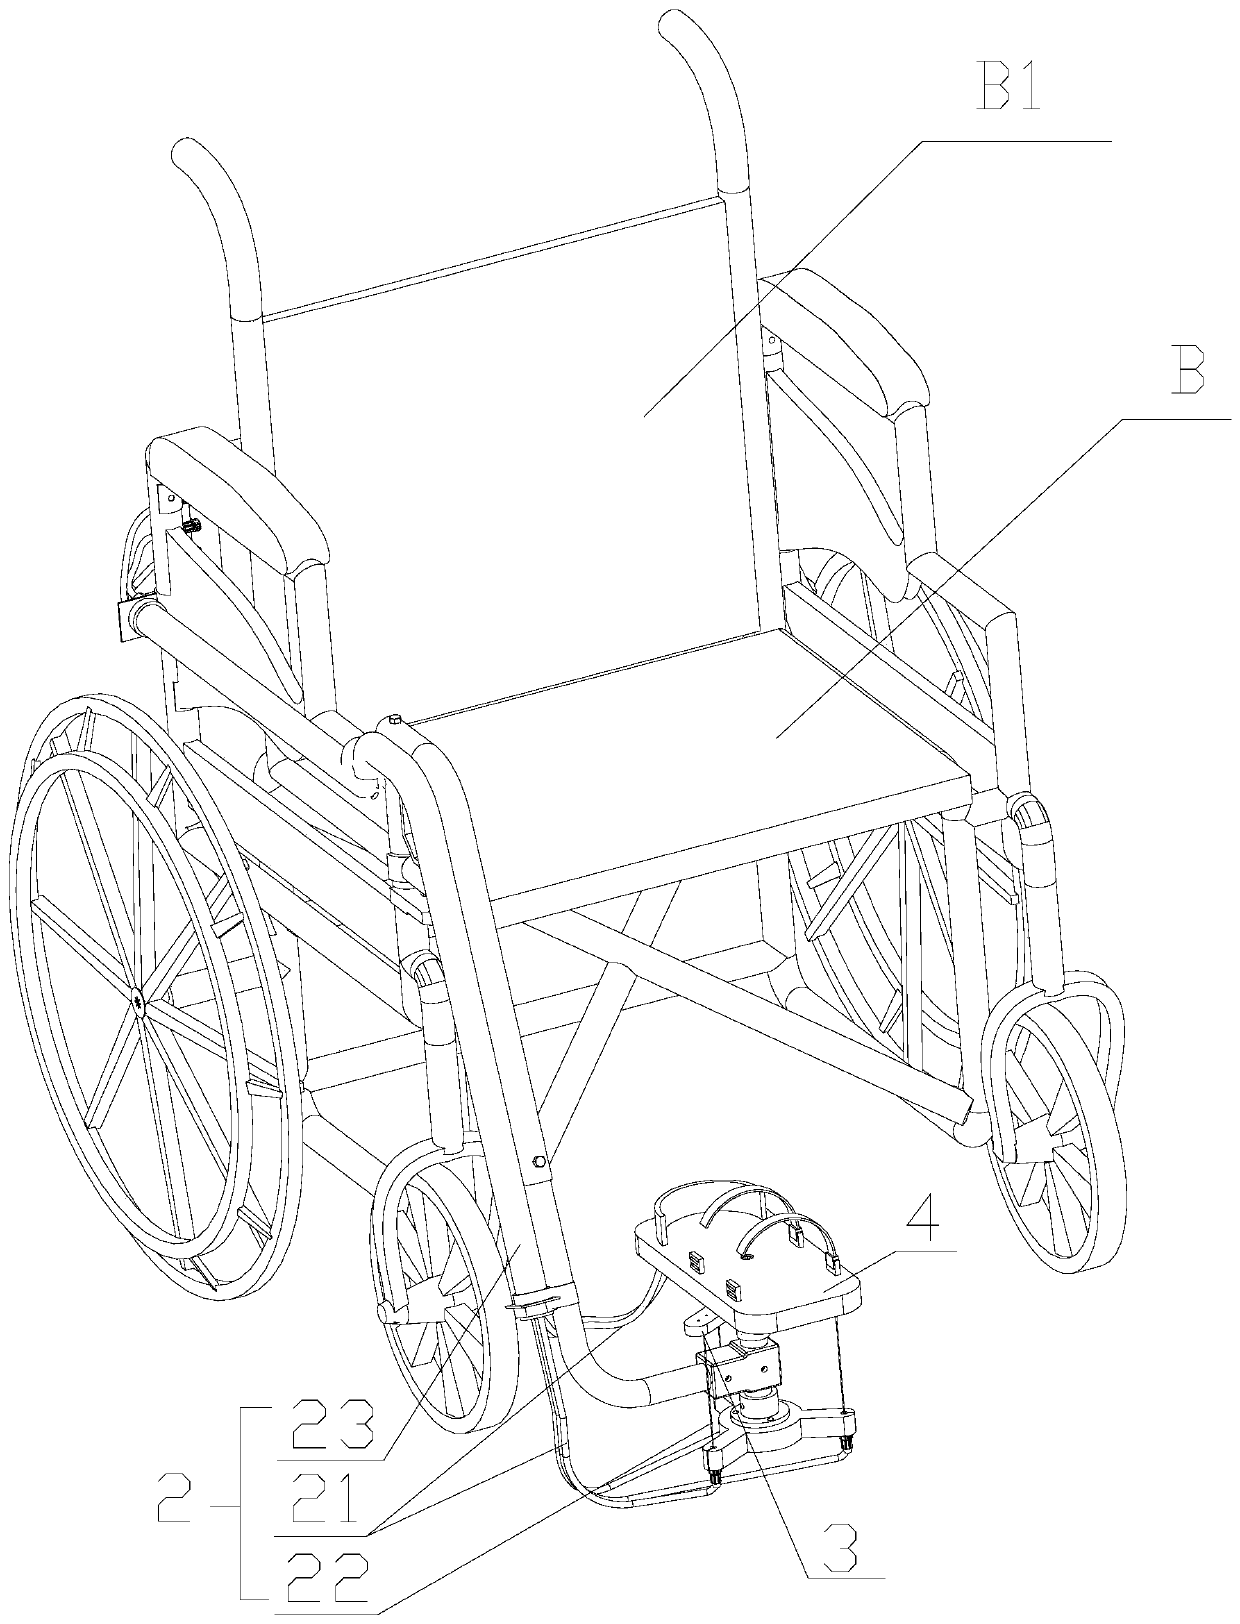 Vehicle-mounted flexible ankle training device